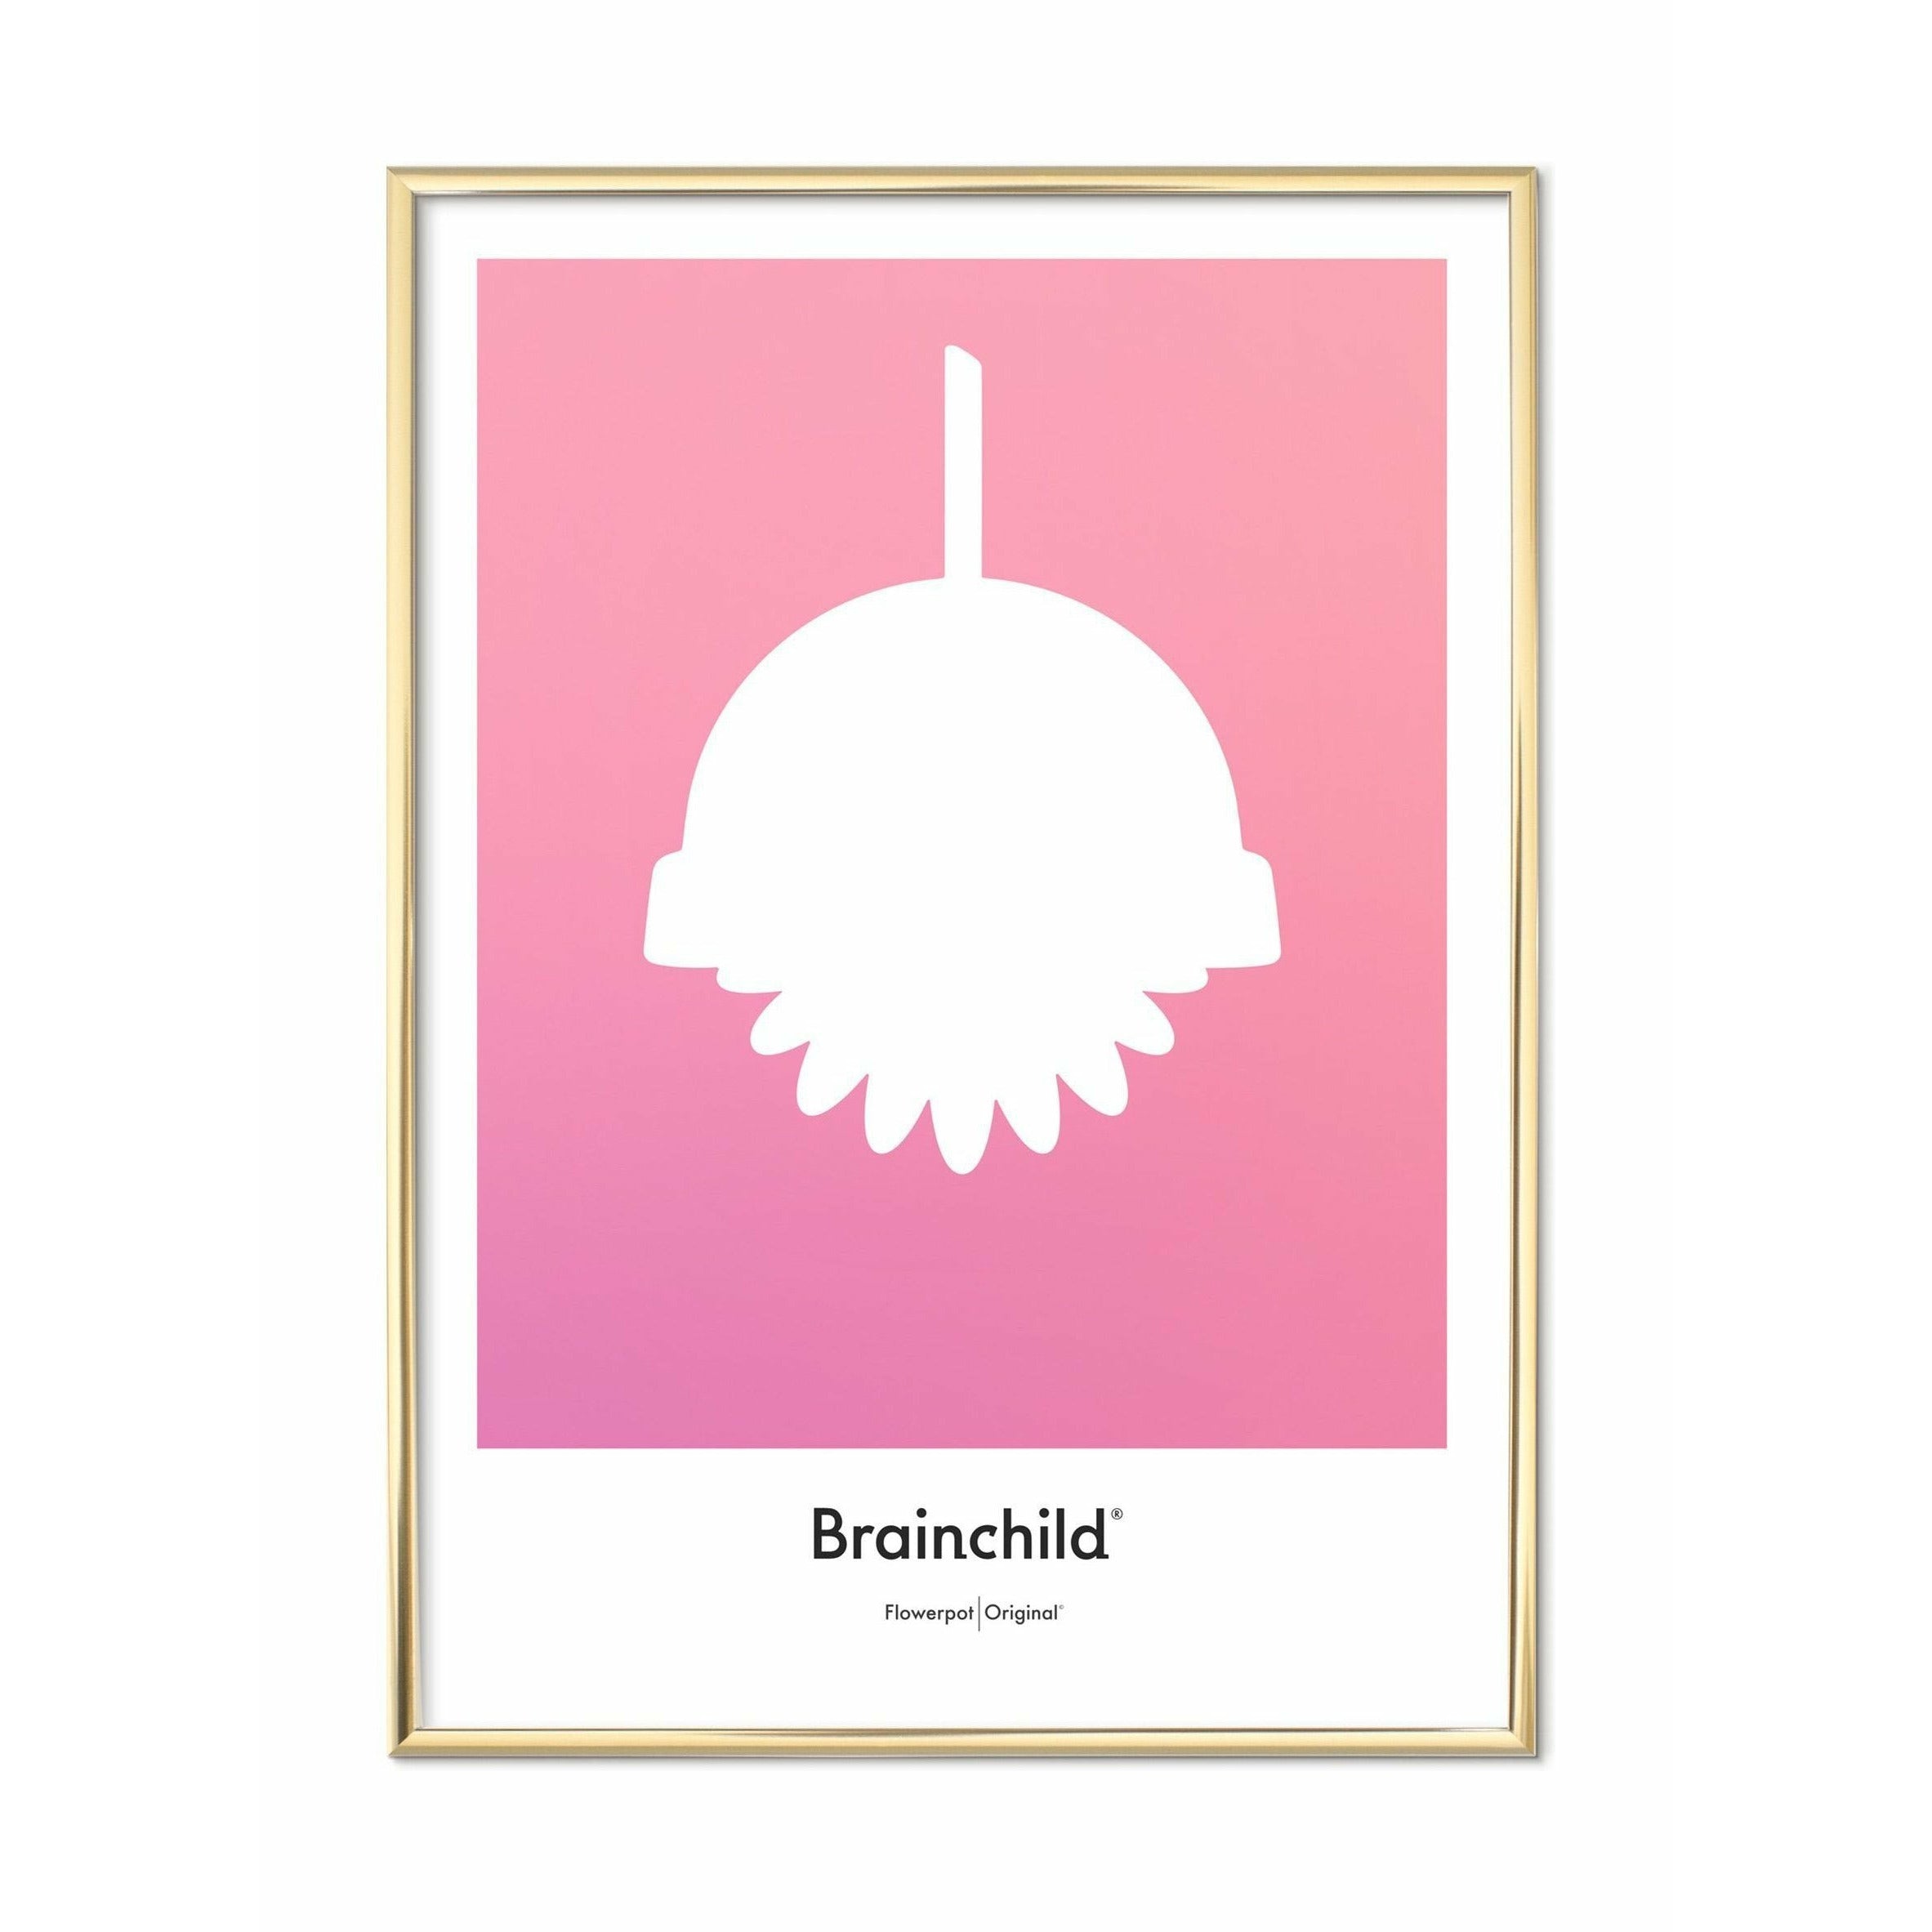 Brainchild Blumentopf Design Icon Poster, messingfarbener Rahmen A5, rosa